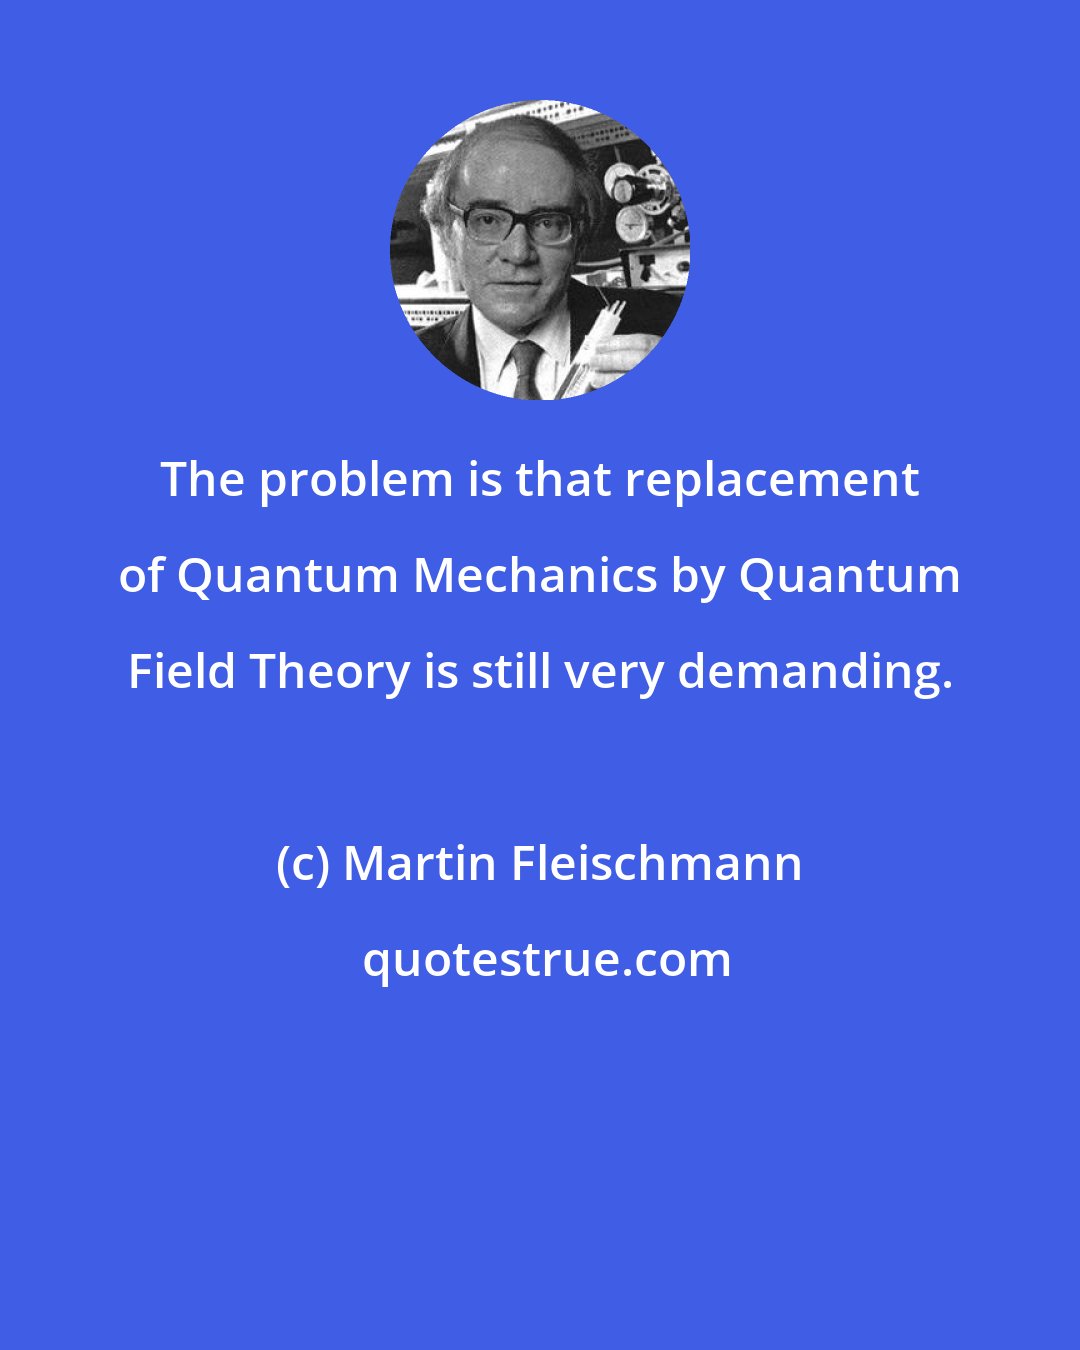 Martin Fleischmann: The problem is that replacement of Quantum Mechanics by Quantum Field Theory is still very demanding.